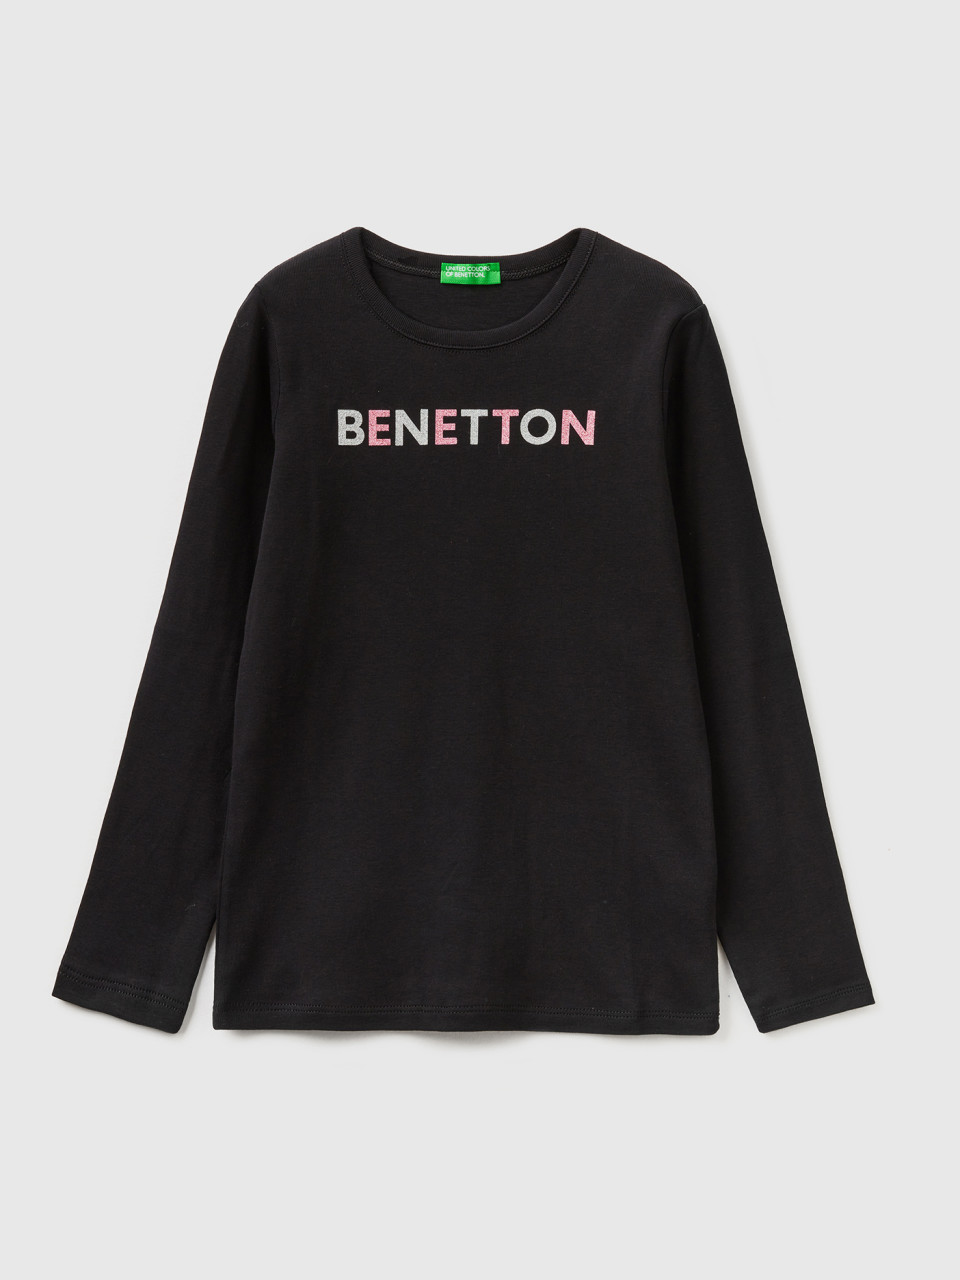 Benetton, Long Sleeve T-shirt With Glitter Print, Black, Kids